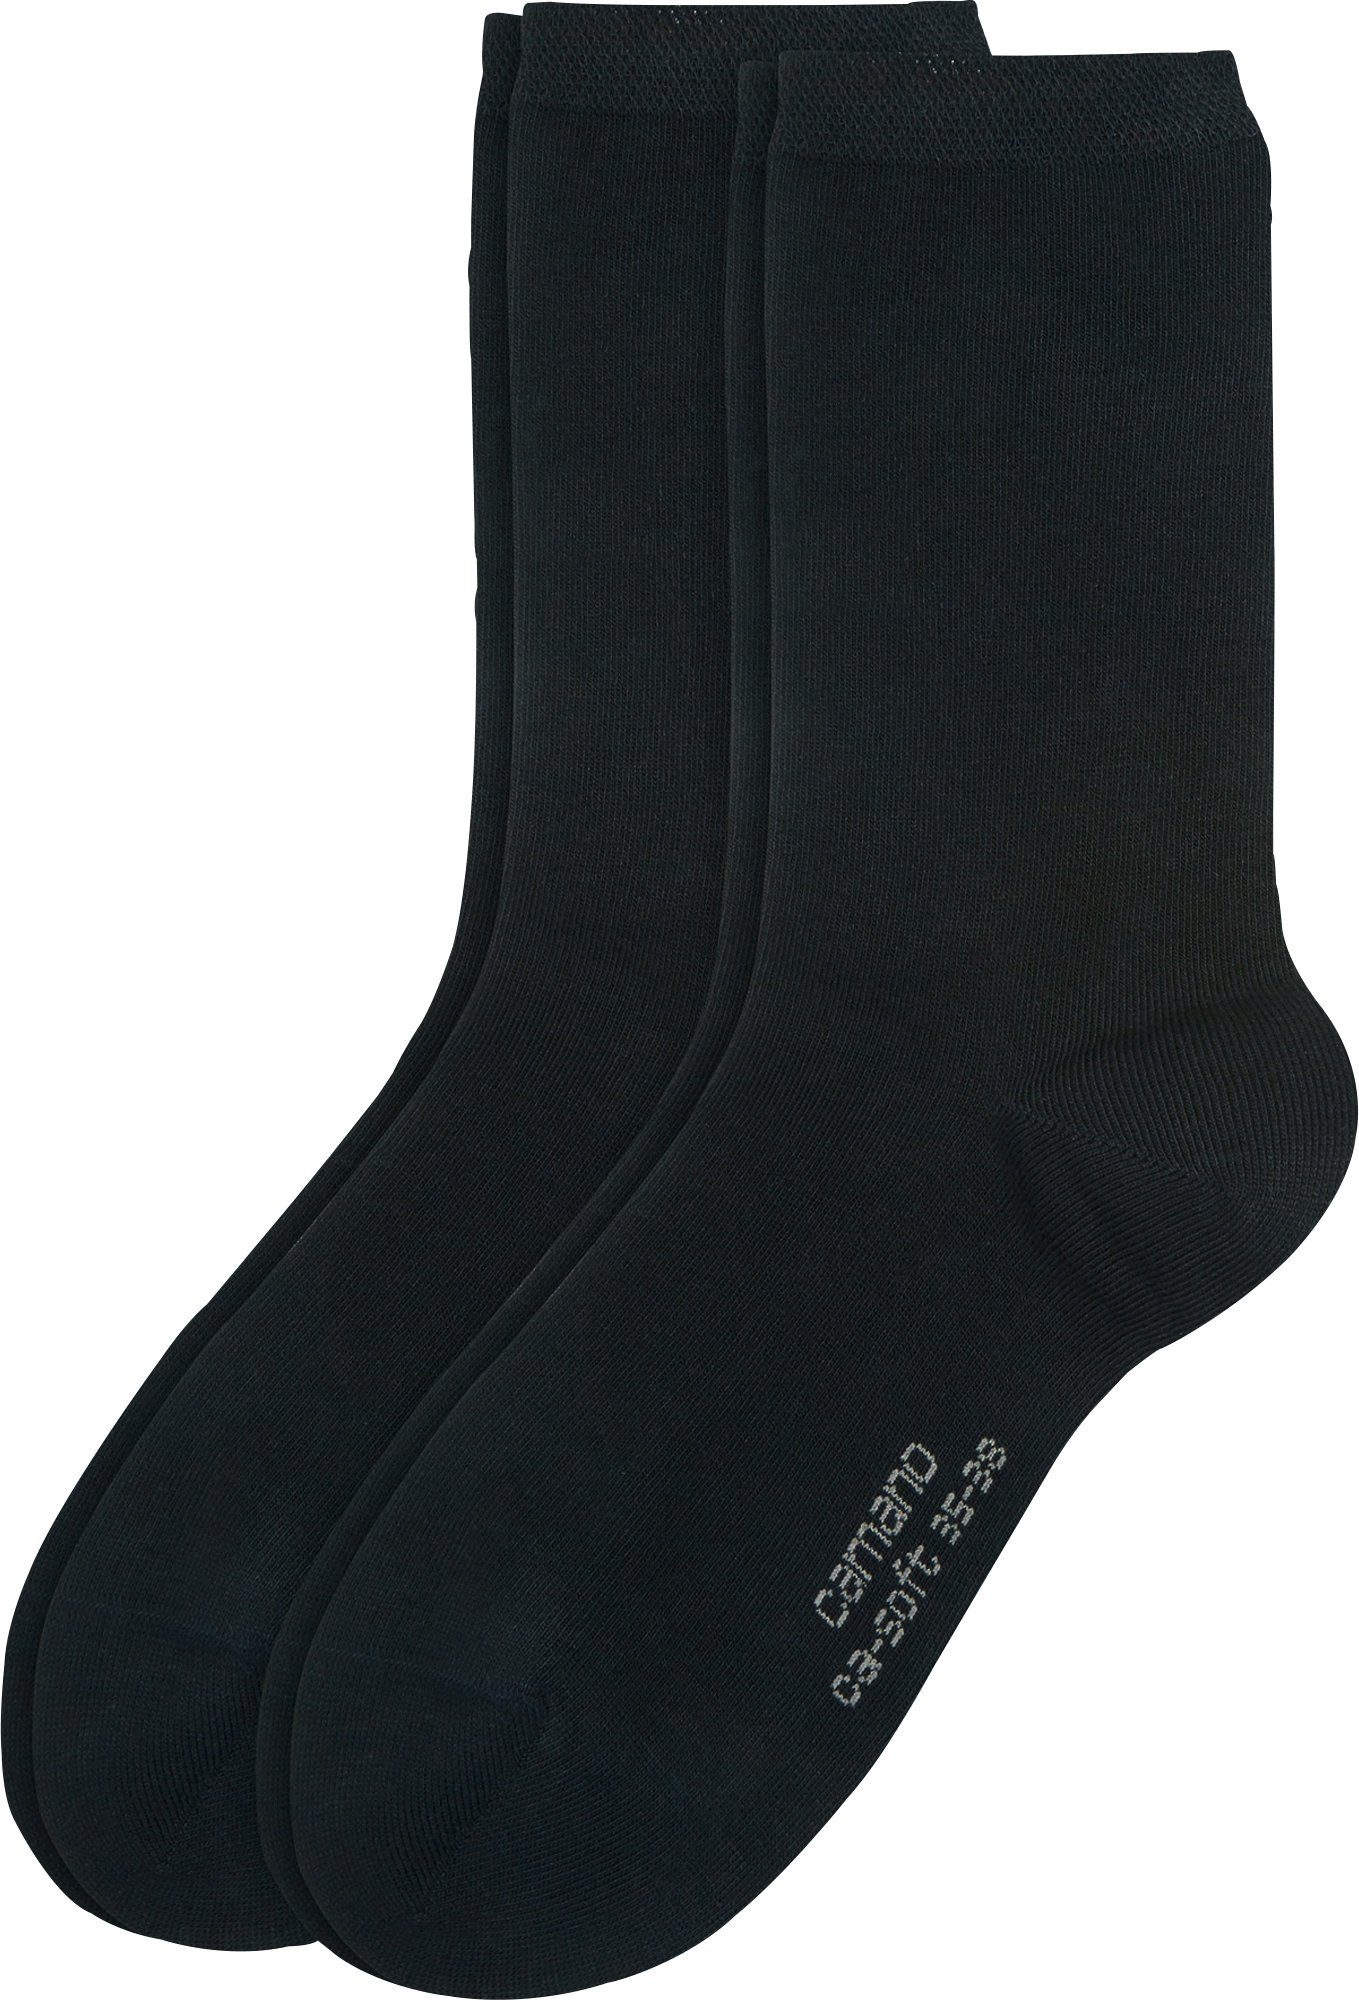 Camano Socken Damen-Socken 2 Paar Uni schwarz